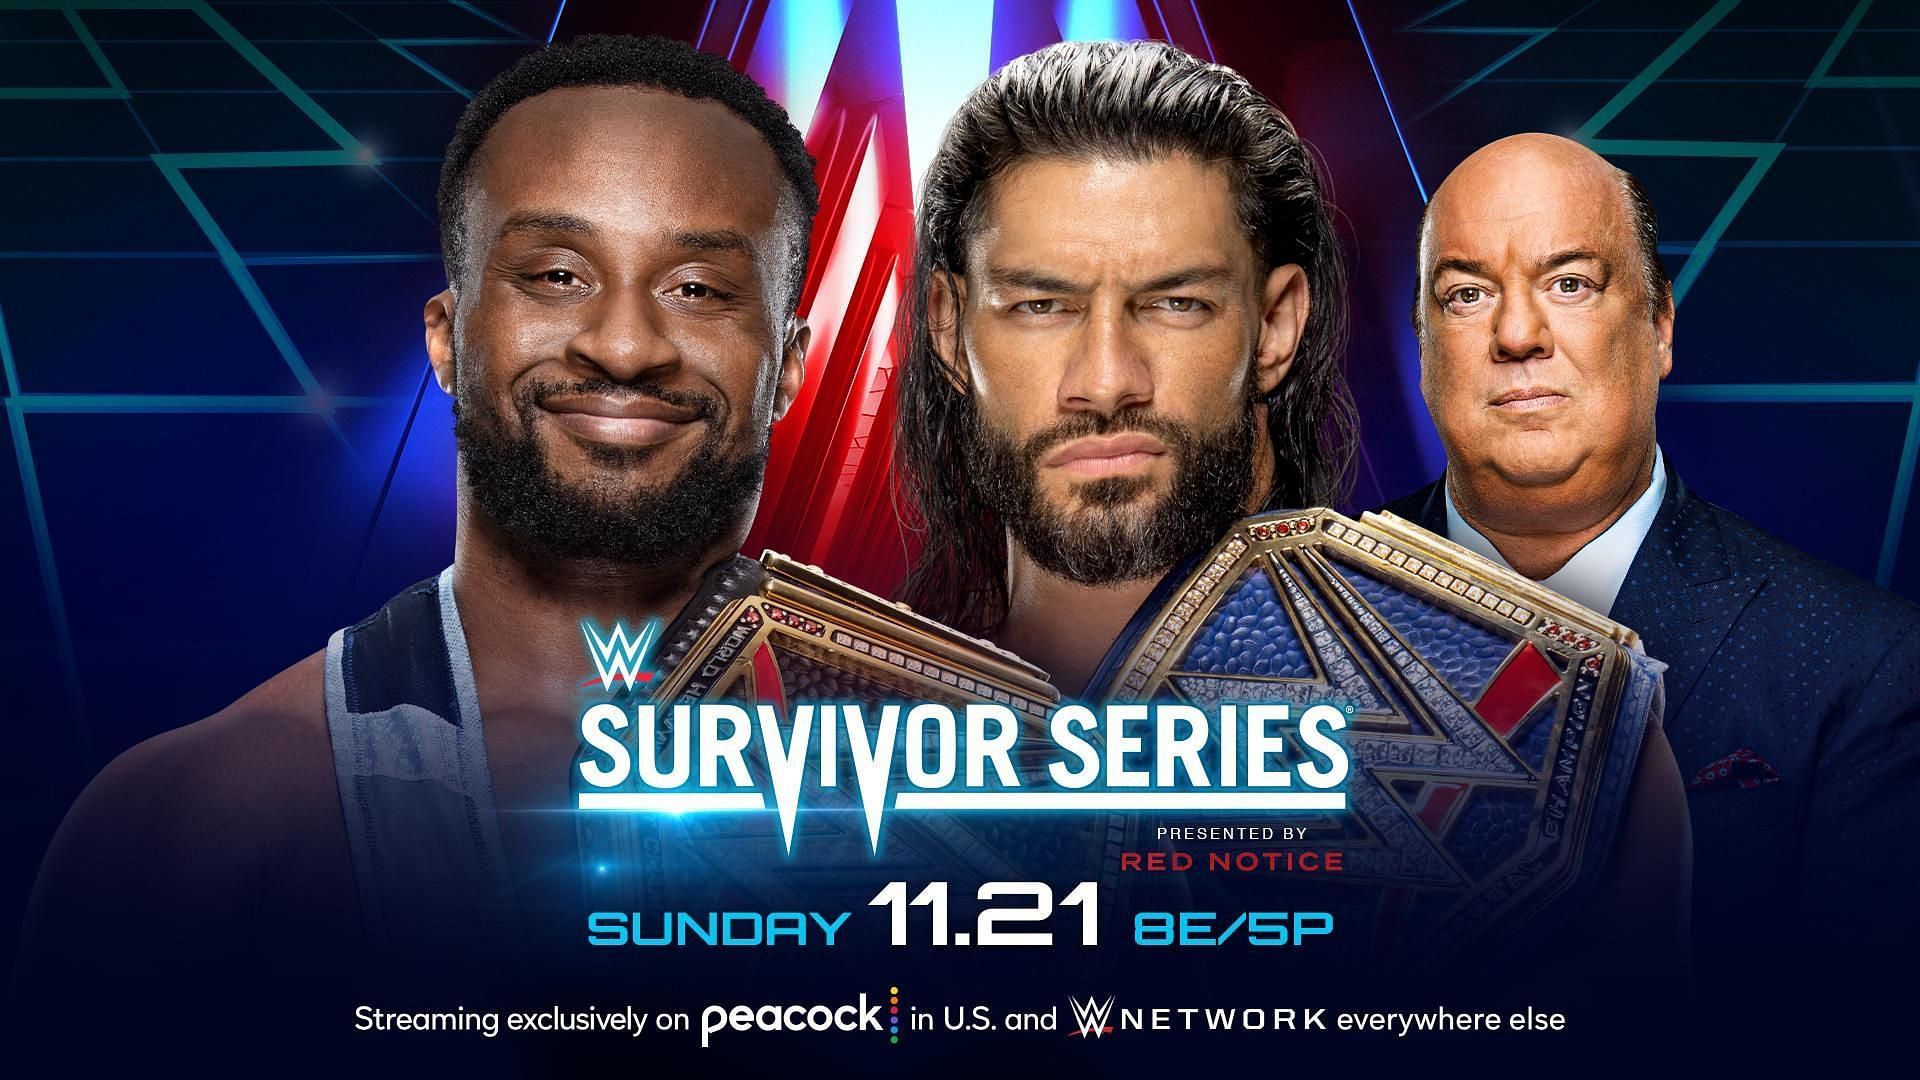 WWE Survivor Series 2021 takes place this Sunday